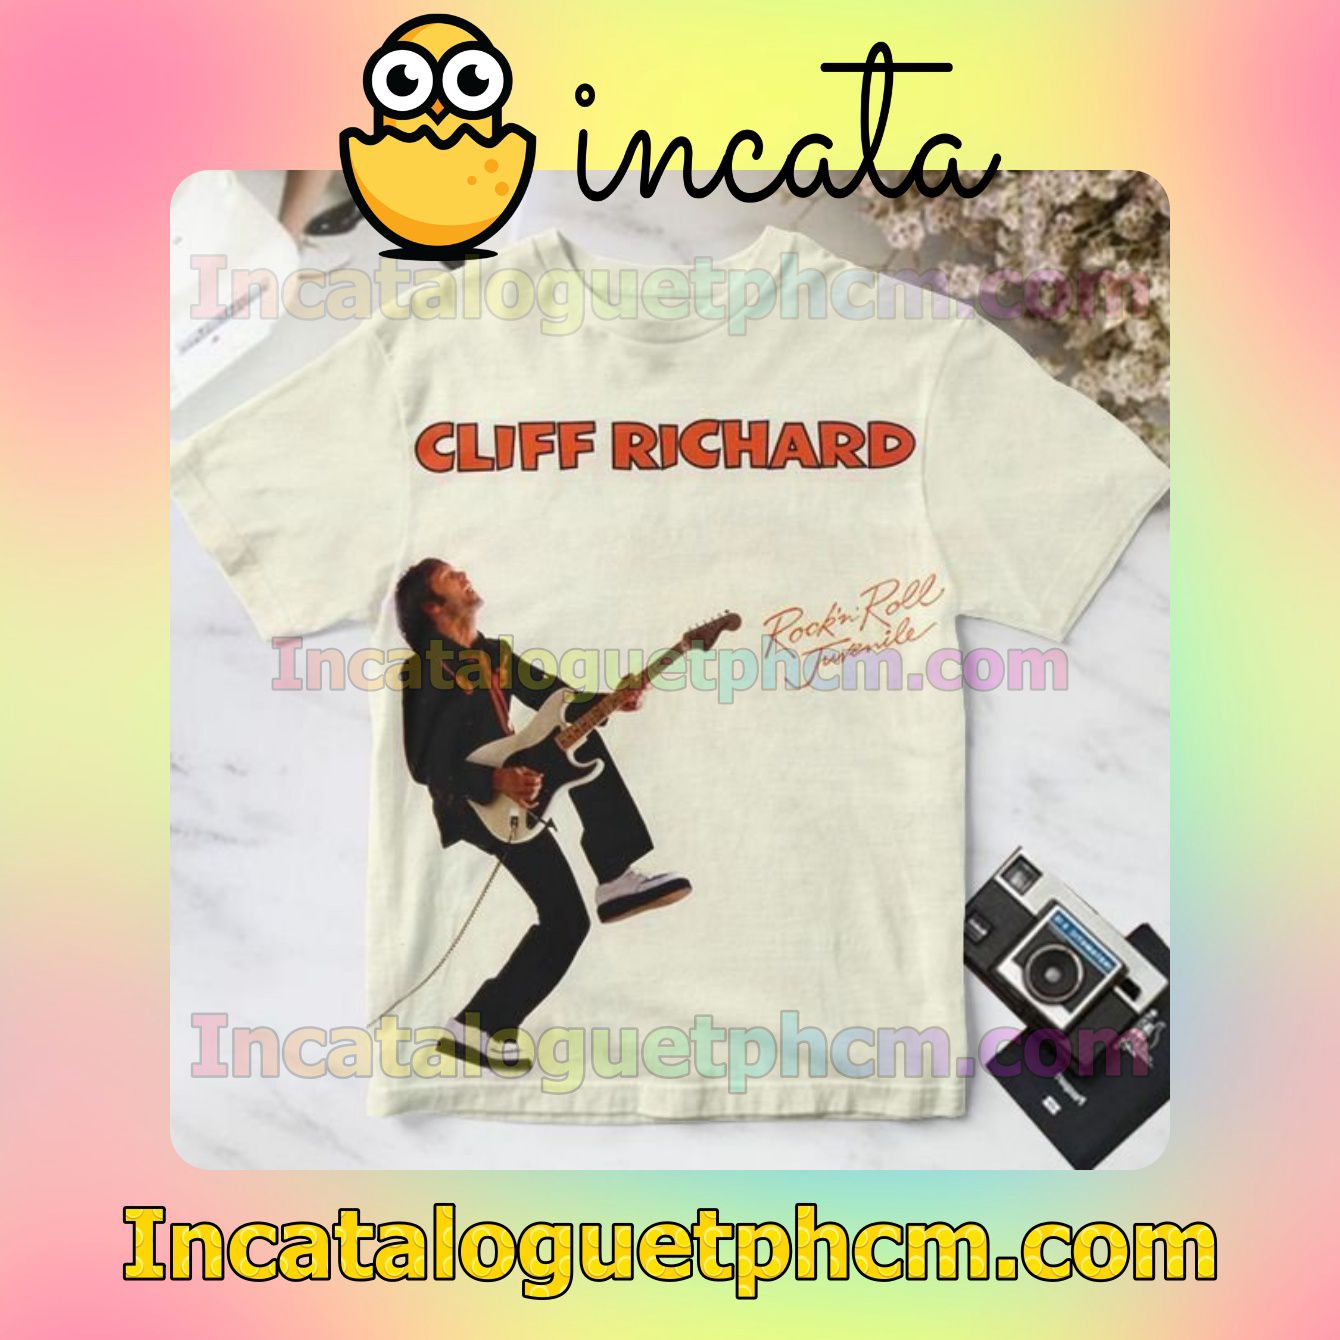 Cliff Richard Rock 'n' Roll Juvenile Album Cover For Fan Shirt